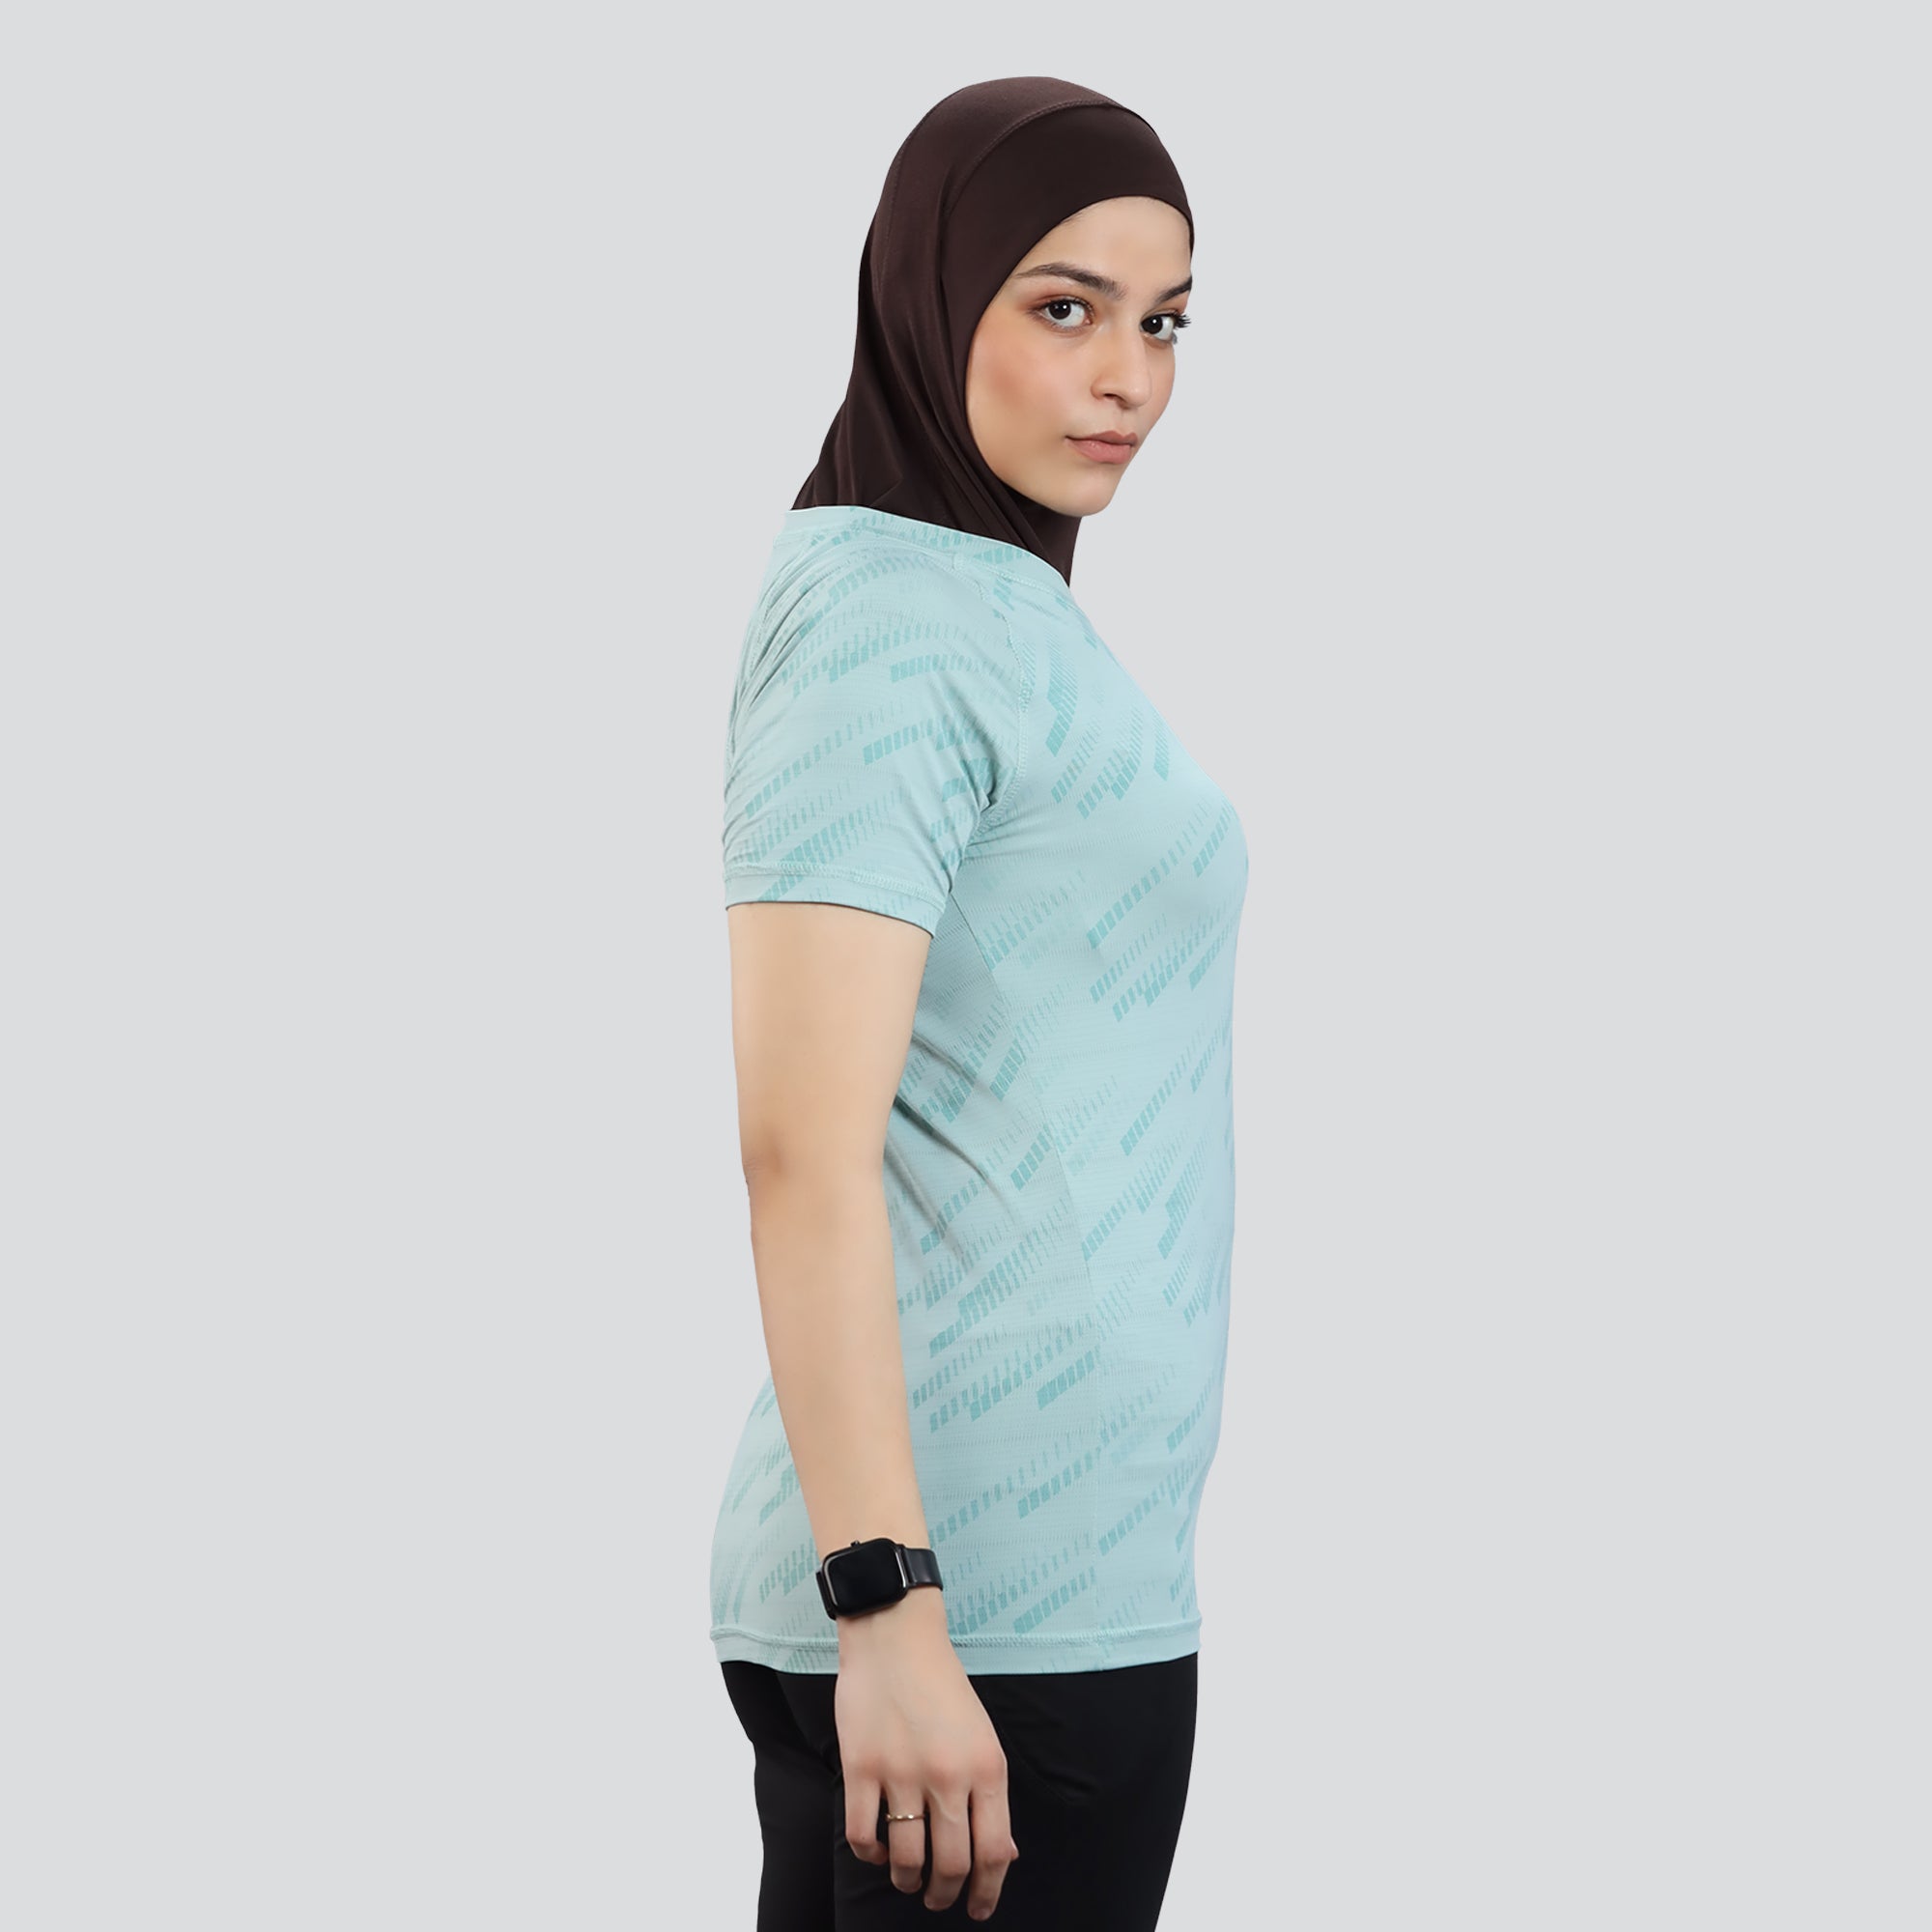 Women's Flex Fit Breathable Activewear T-Shirt - Sea Green